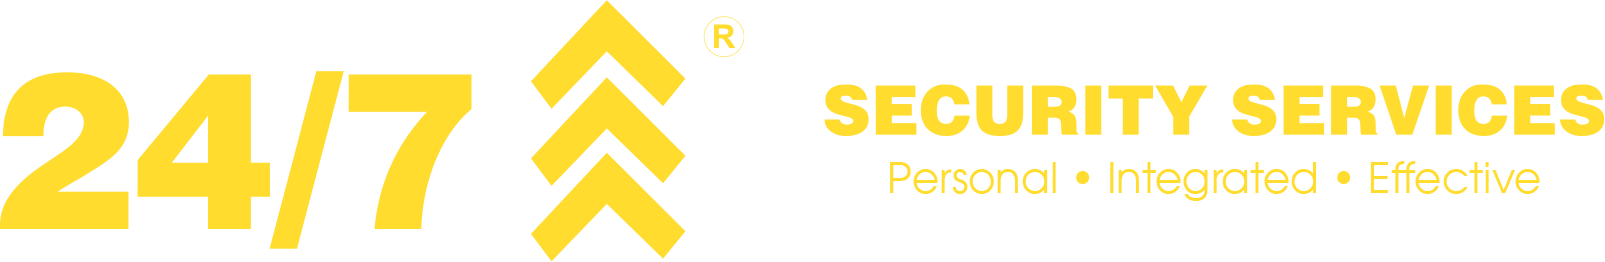 24-7-Security-Adwords-Landing-Page-Logo